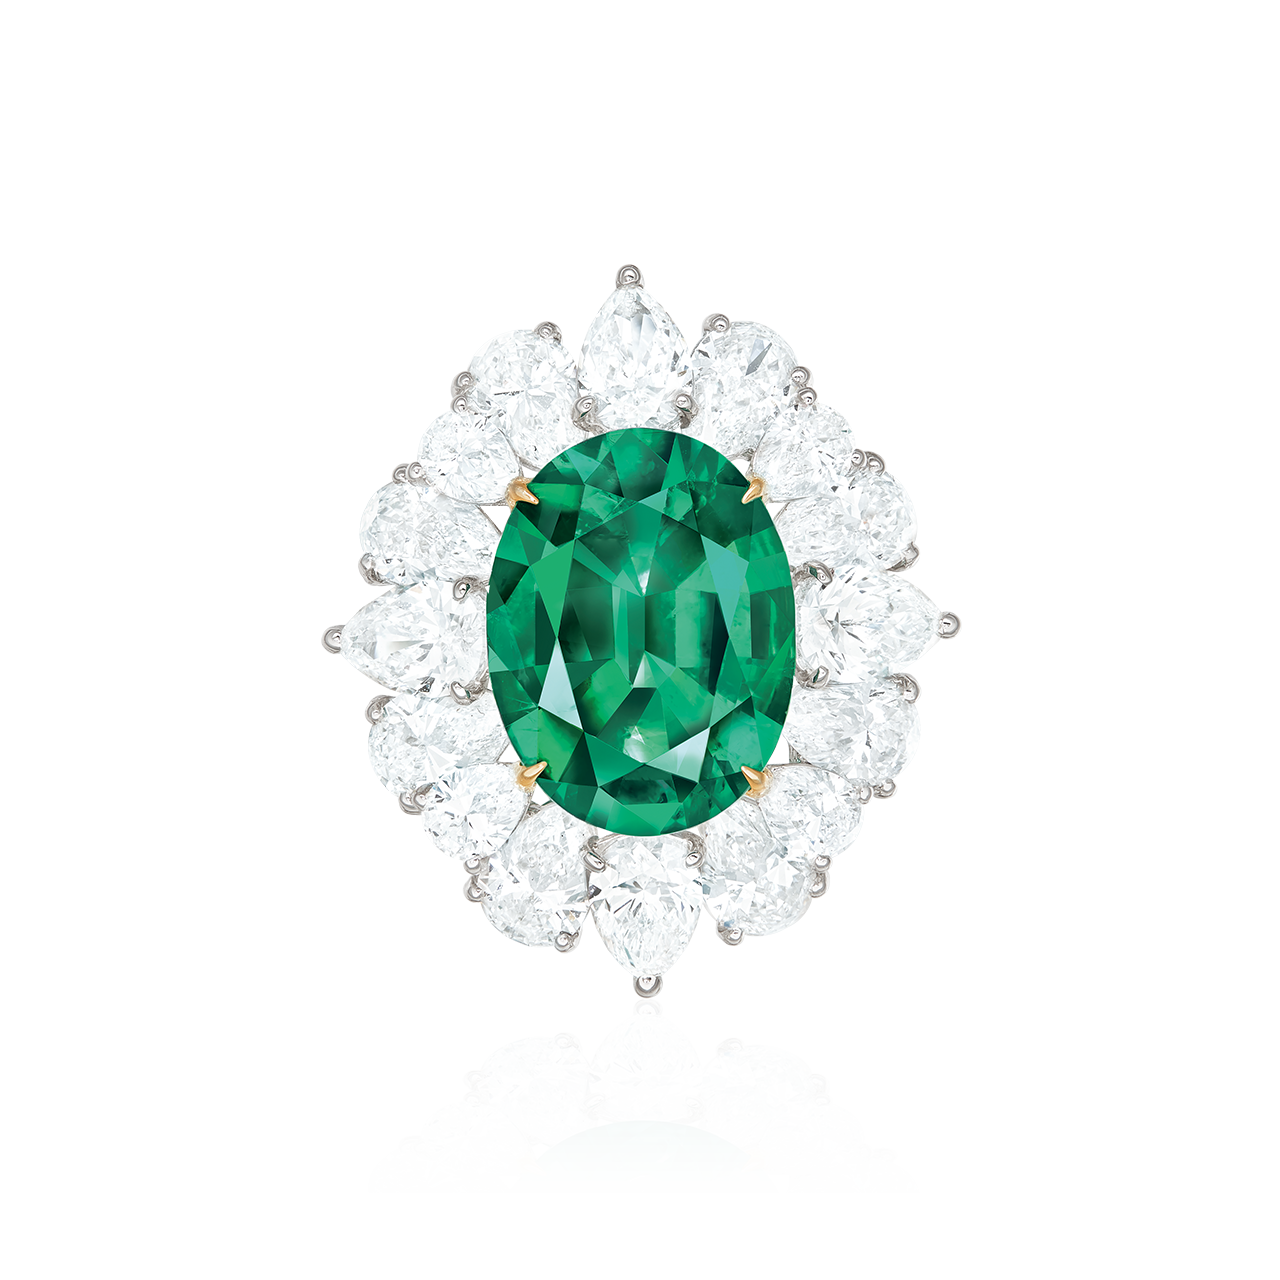 GUB AGL 哥倫比亞天然無浸油祖母綠鑽戒 4.51克拉
Colombian Emerald And
Diamond Ring